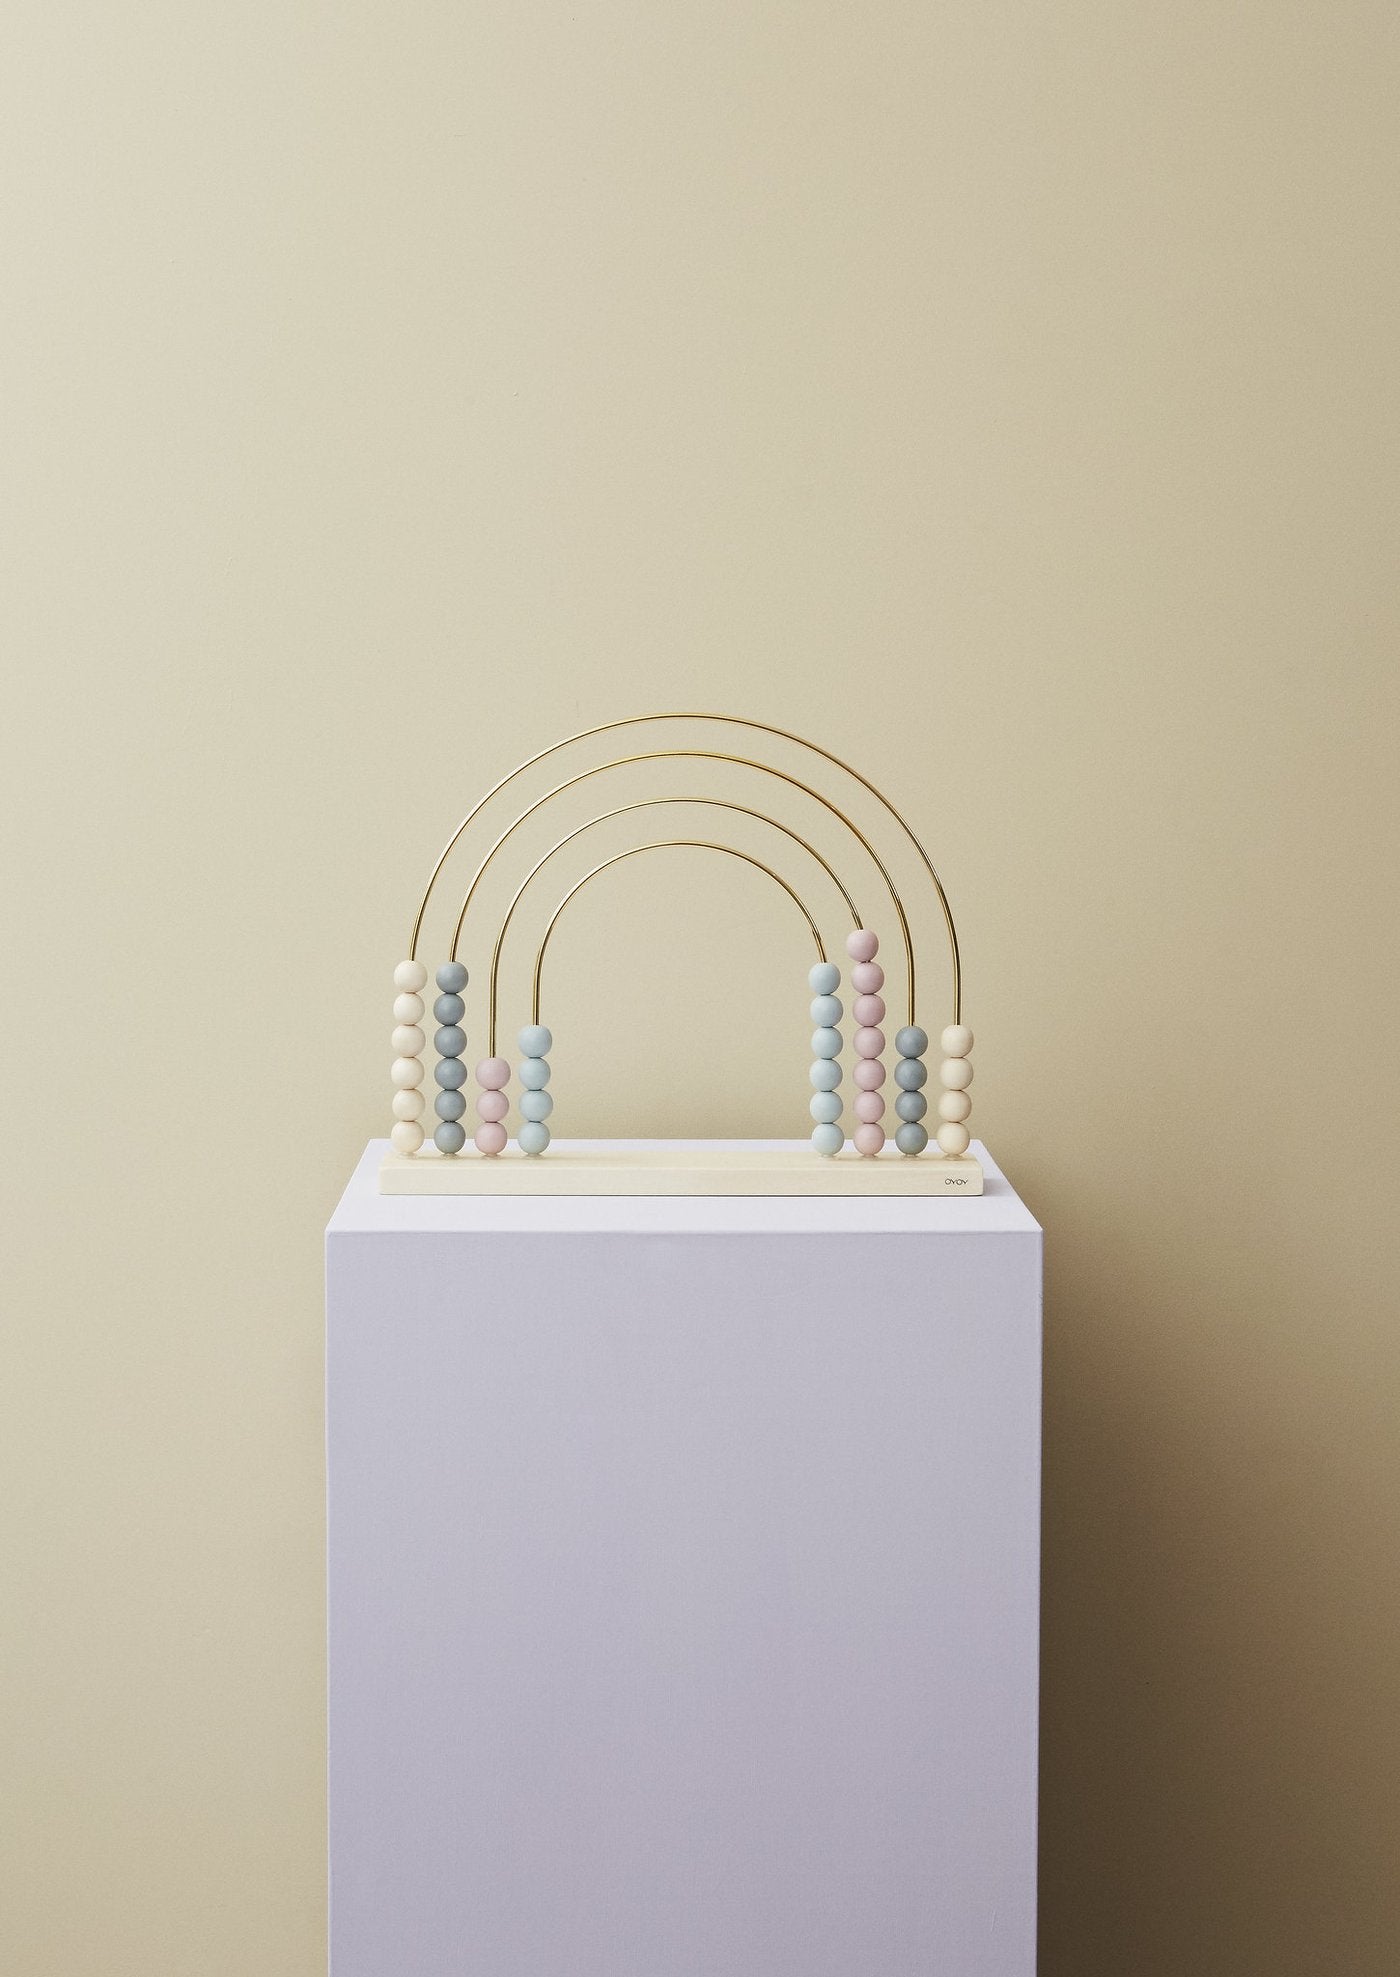 Abacus Rainbow abacus